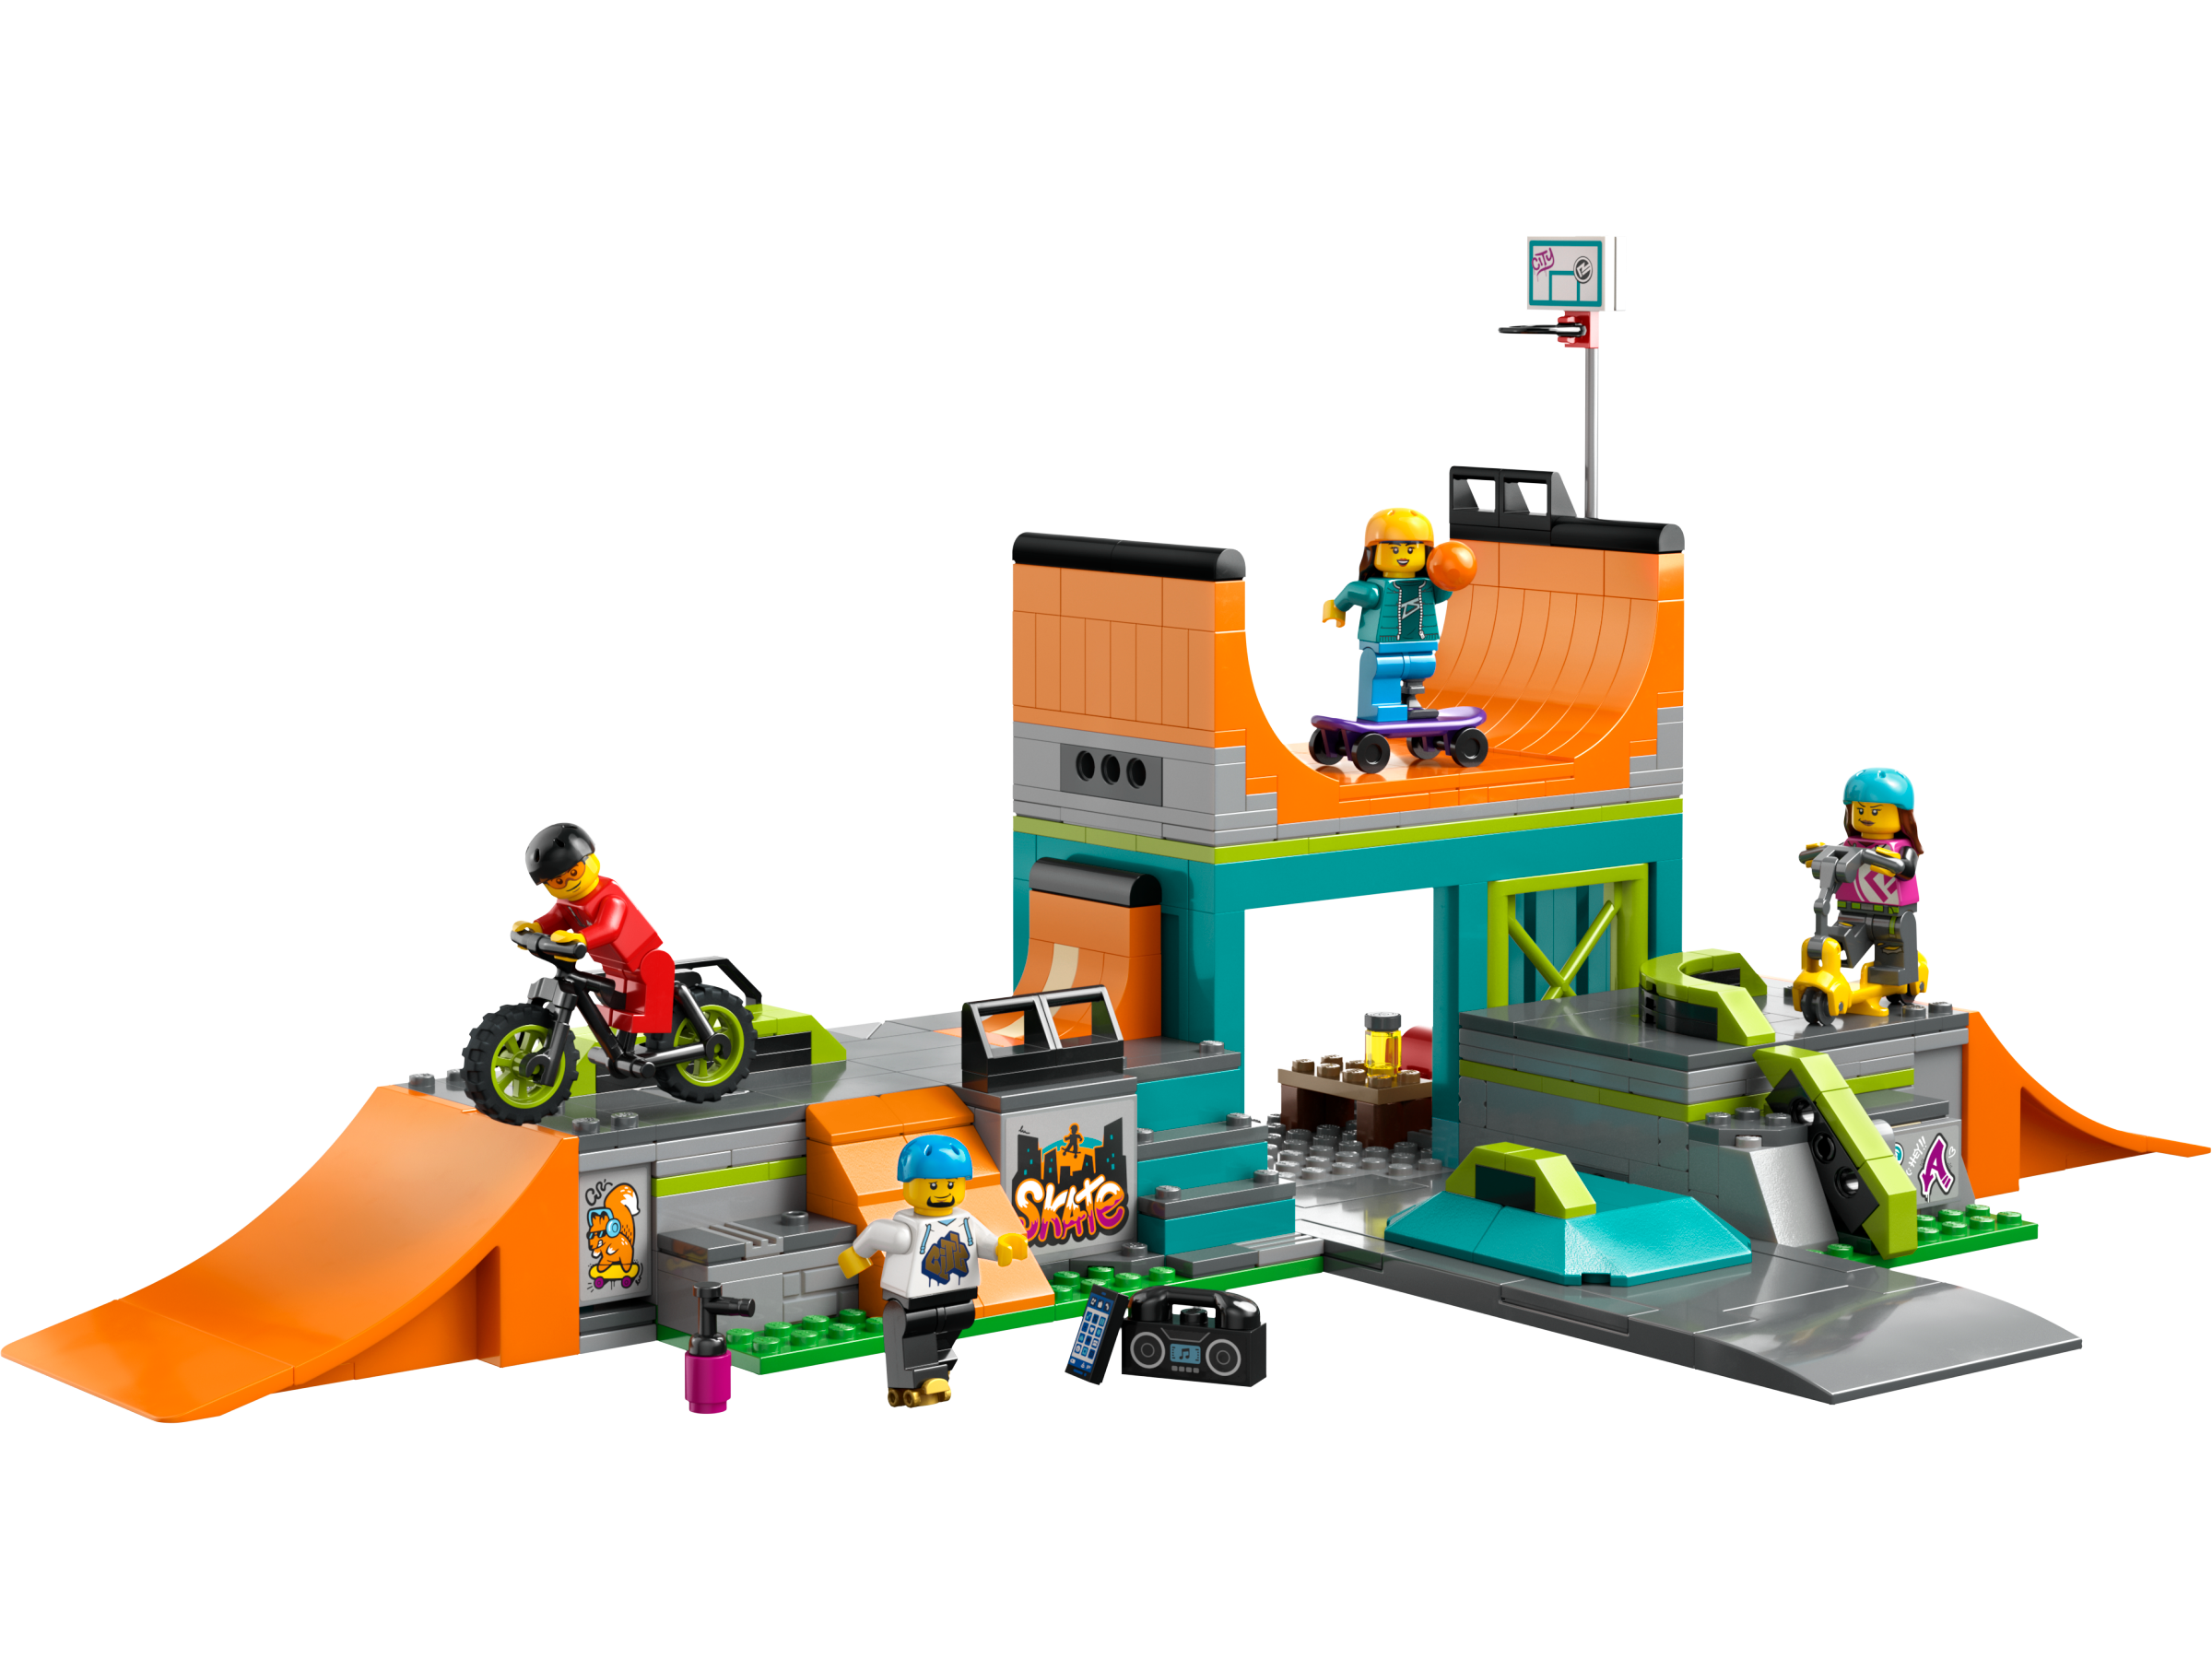 LEGO® City 60364 Skaterpark